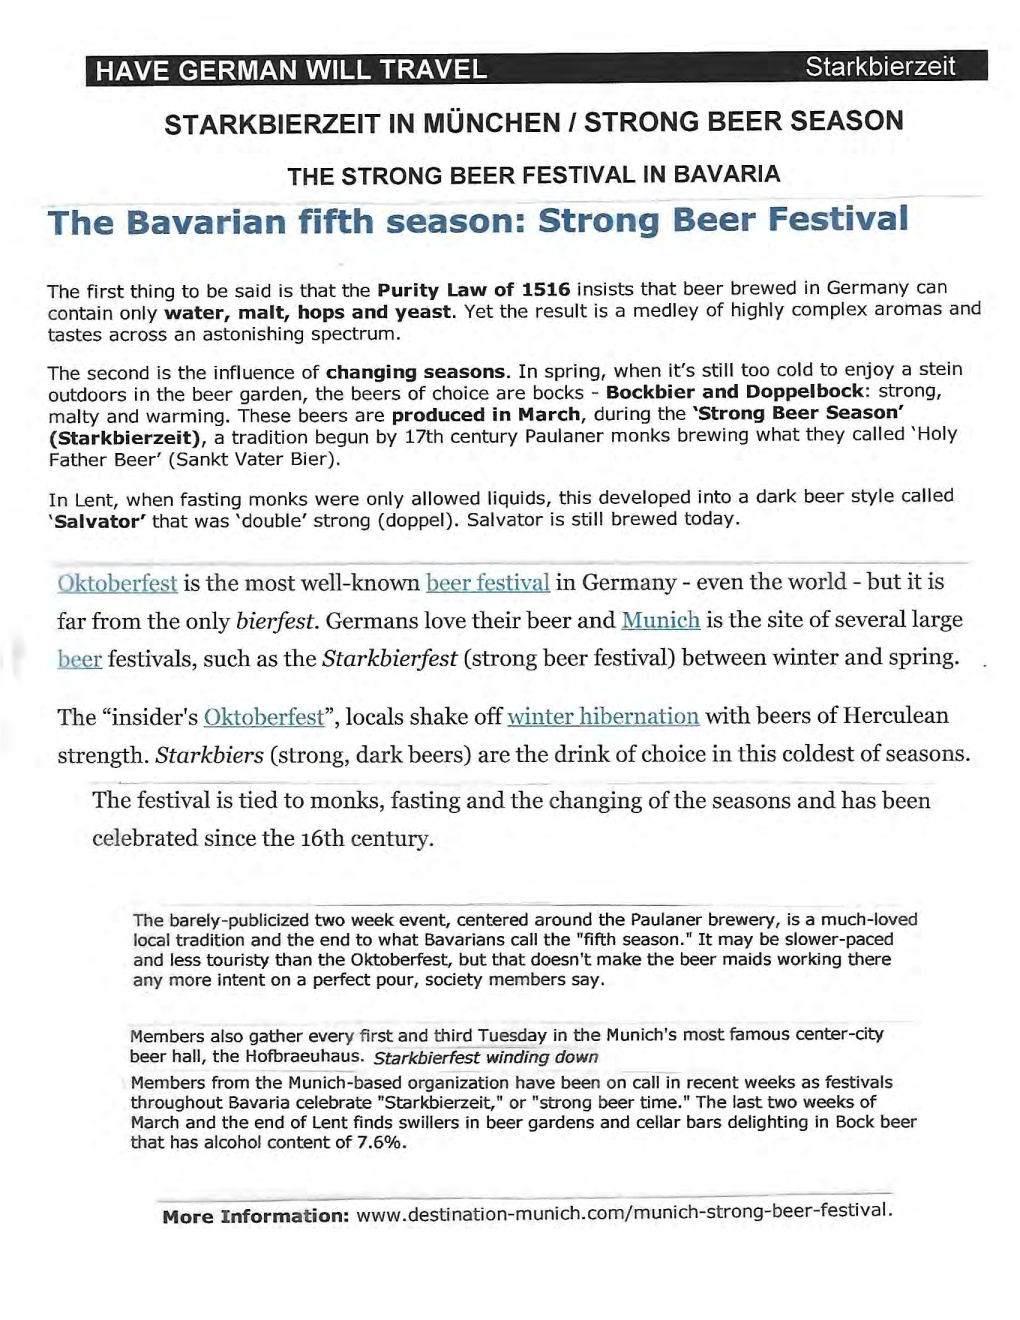 STRONG BEER FESTIVAL in BAVARIA the Bavarian Fifth Season: Strong Beer Festival